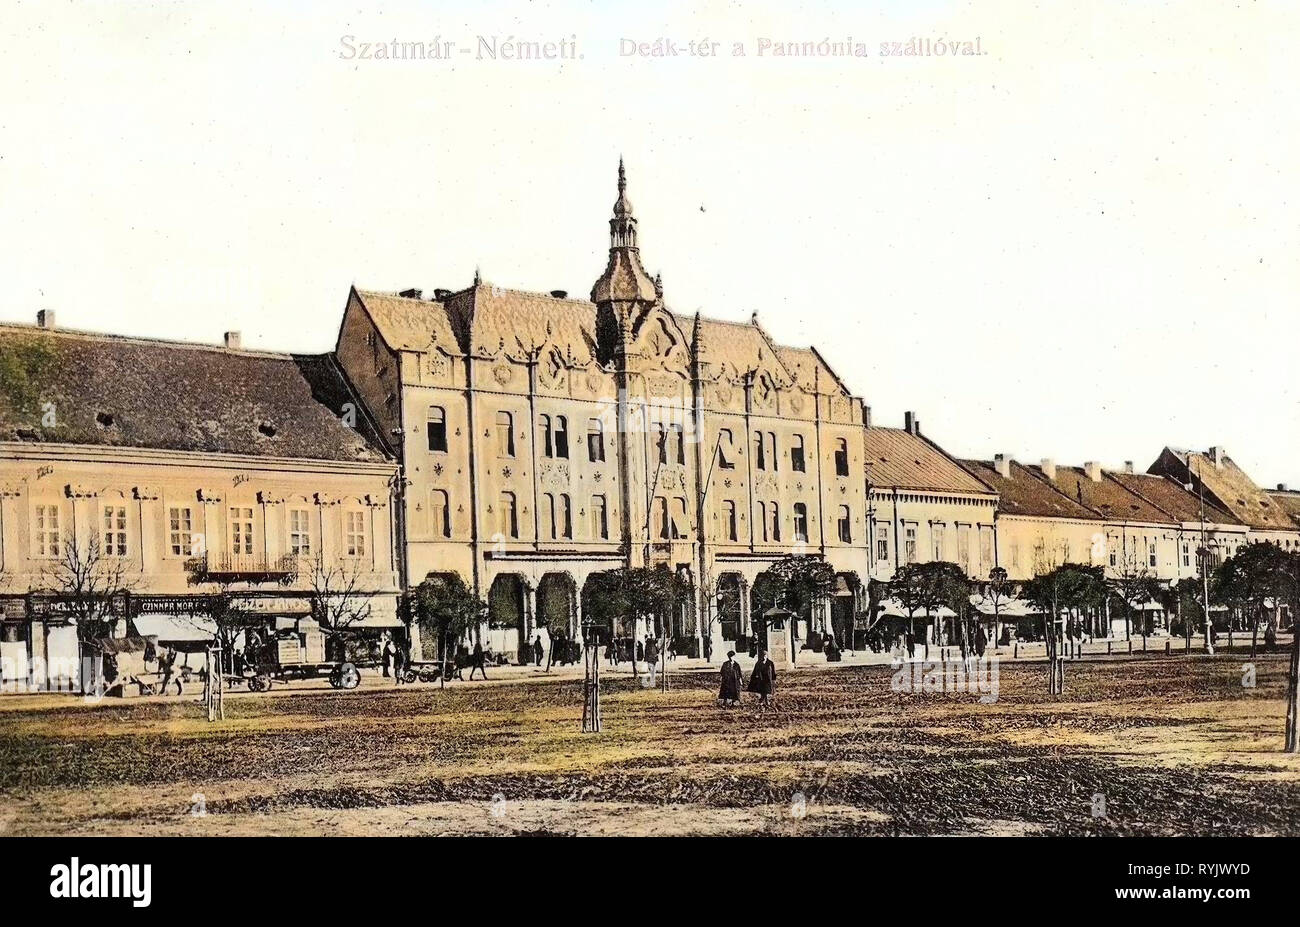 Hôtel Dacia à Satu Mare, 1911, Satu Mare, Szatmar, Nemeti, Deak, un Panononia szalloval ter Banque D'Images